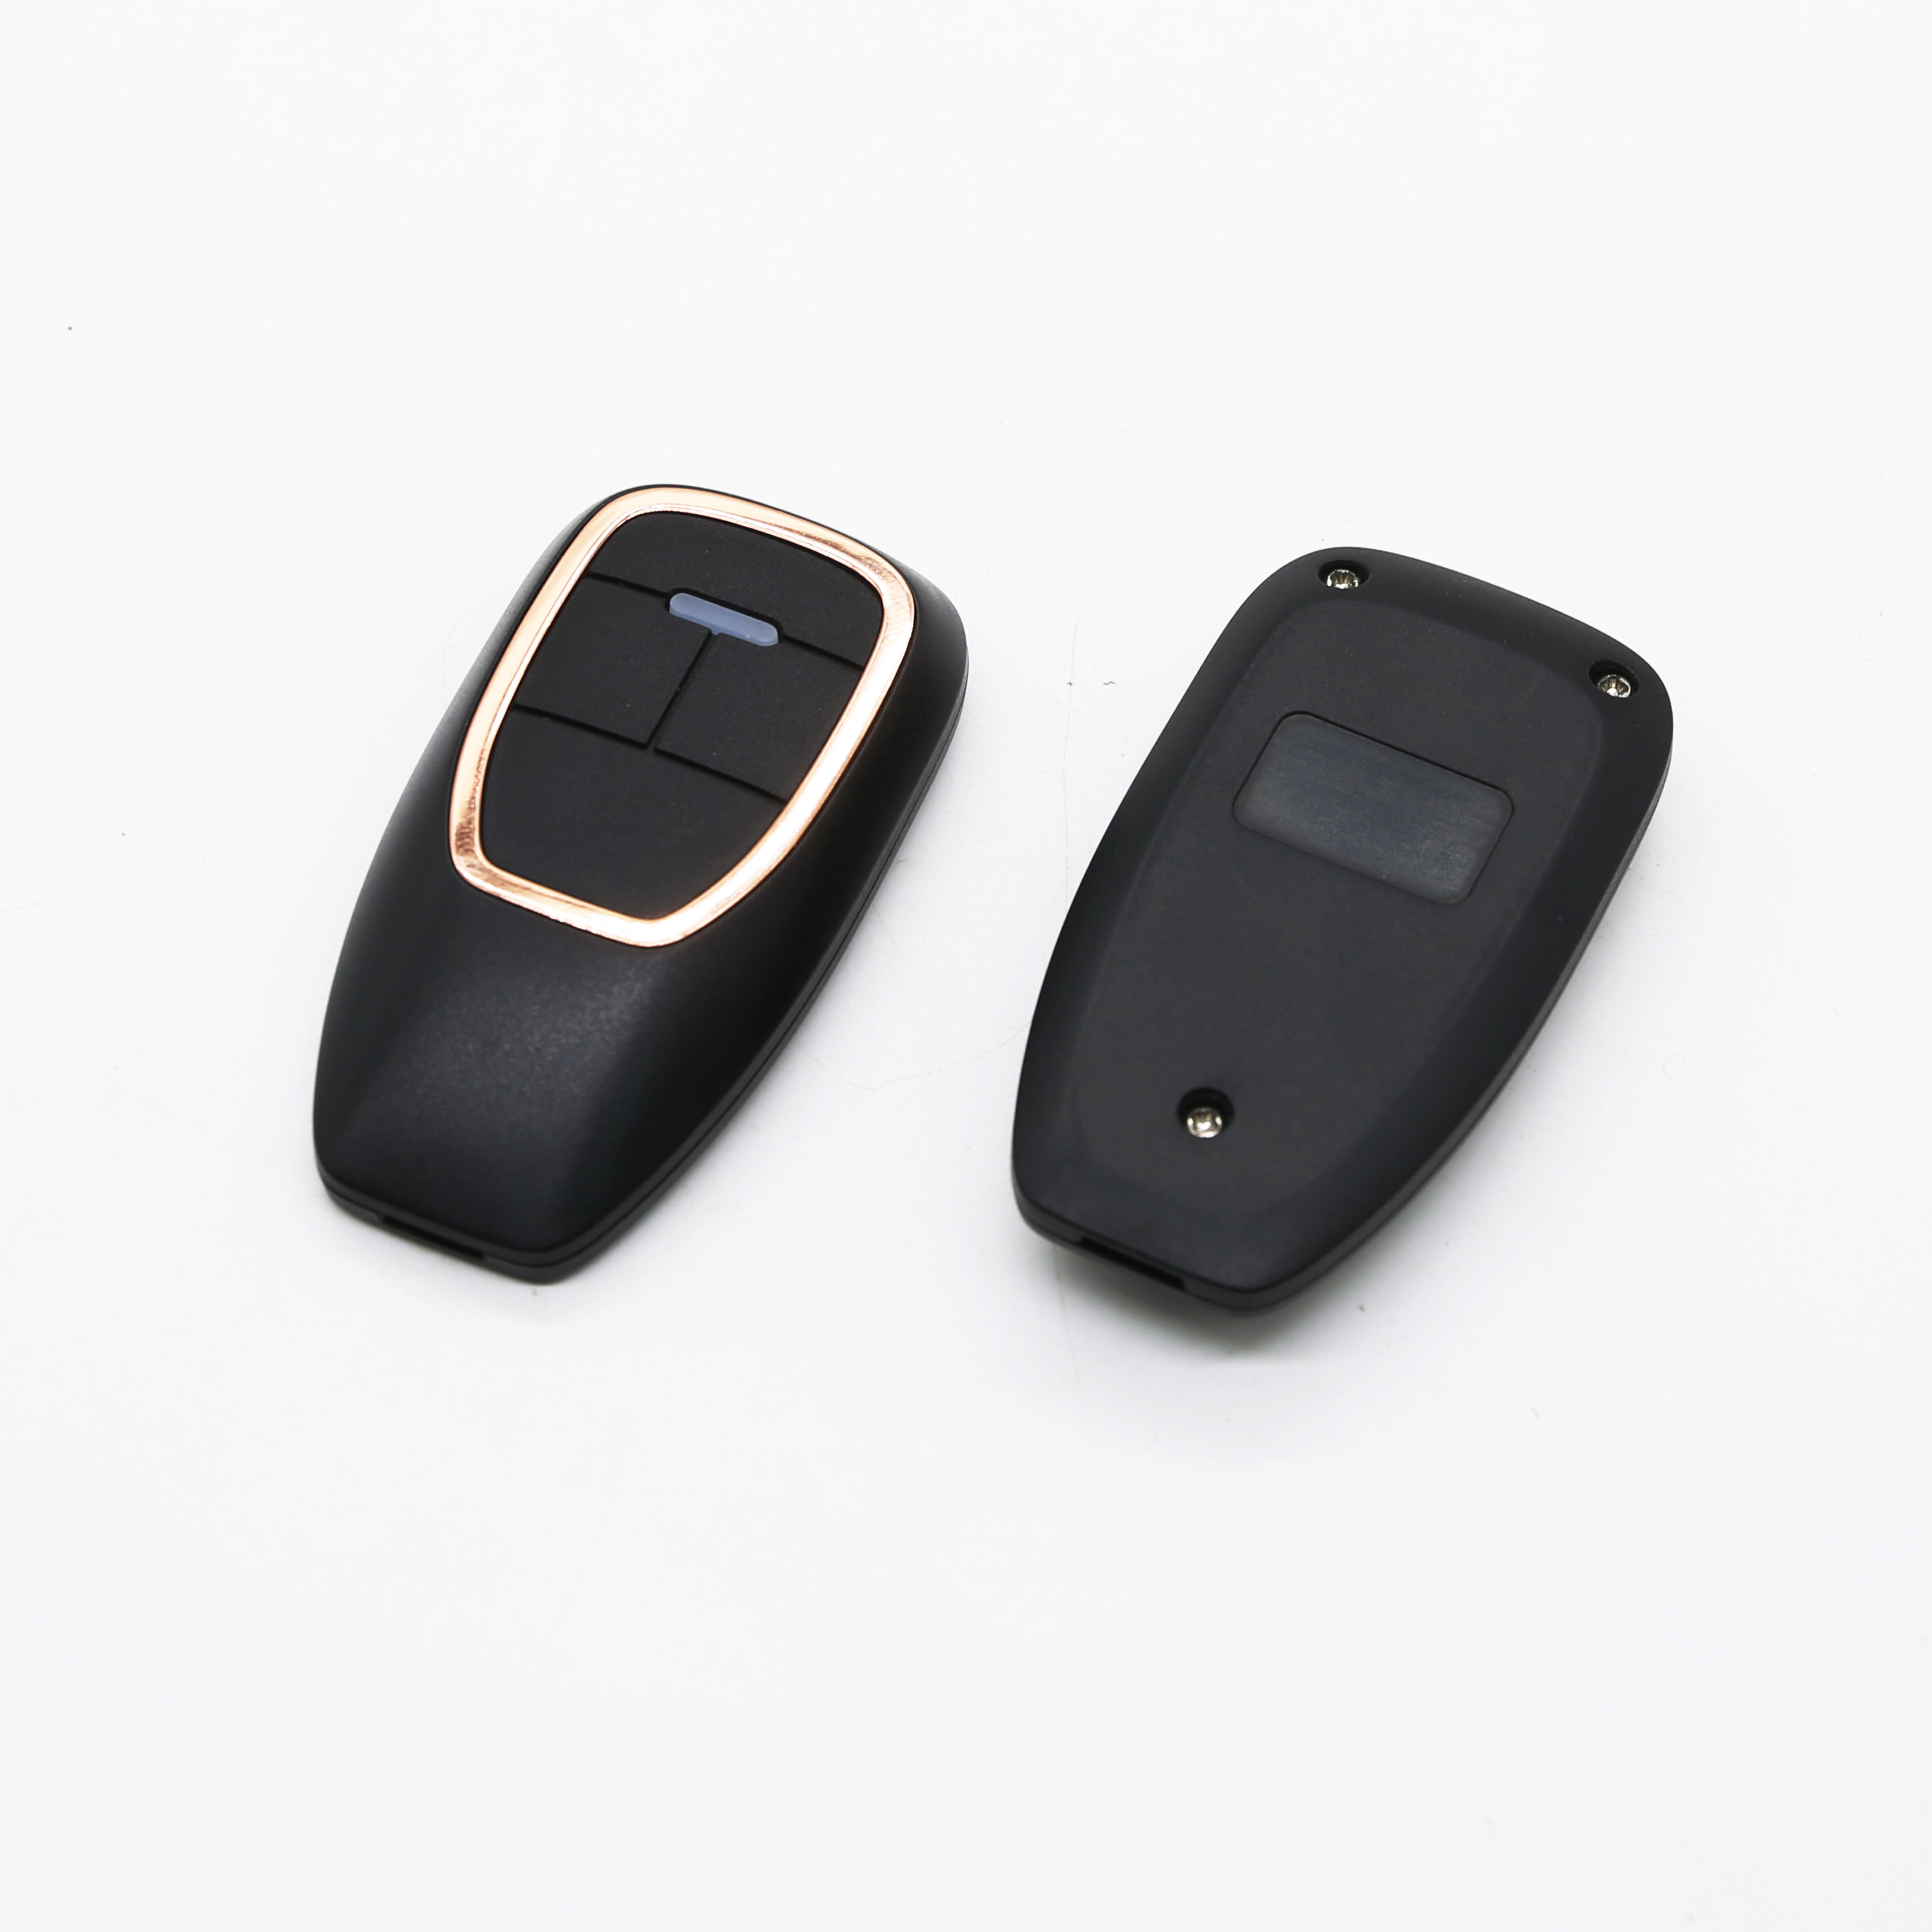 KelvinReg Small Size Waterproof 4-Button Wireless Remote Control